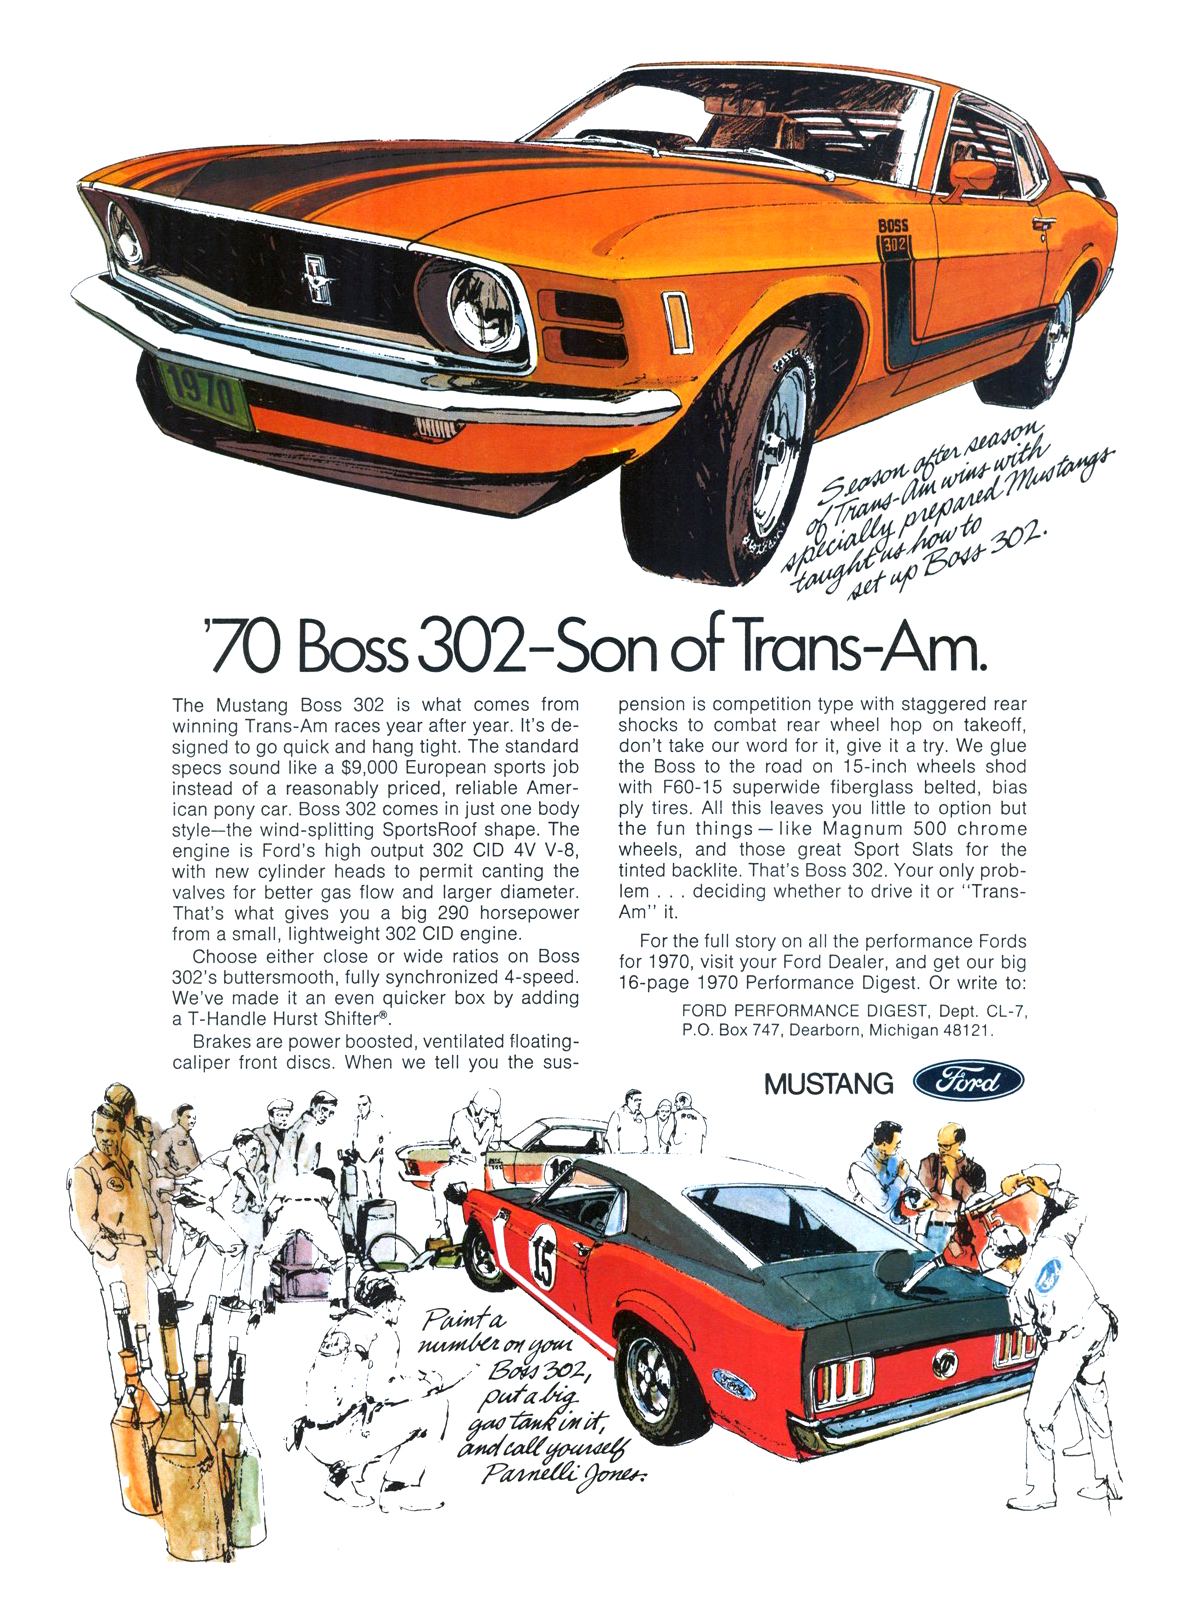 Ford Mustang Boss 302 Ad (1969?): '70 Boss 302–Son of Trans-Am